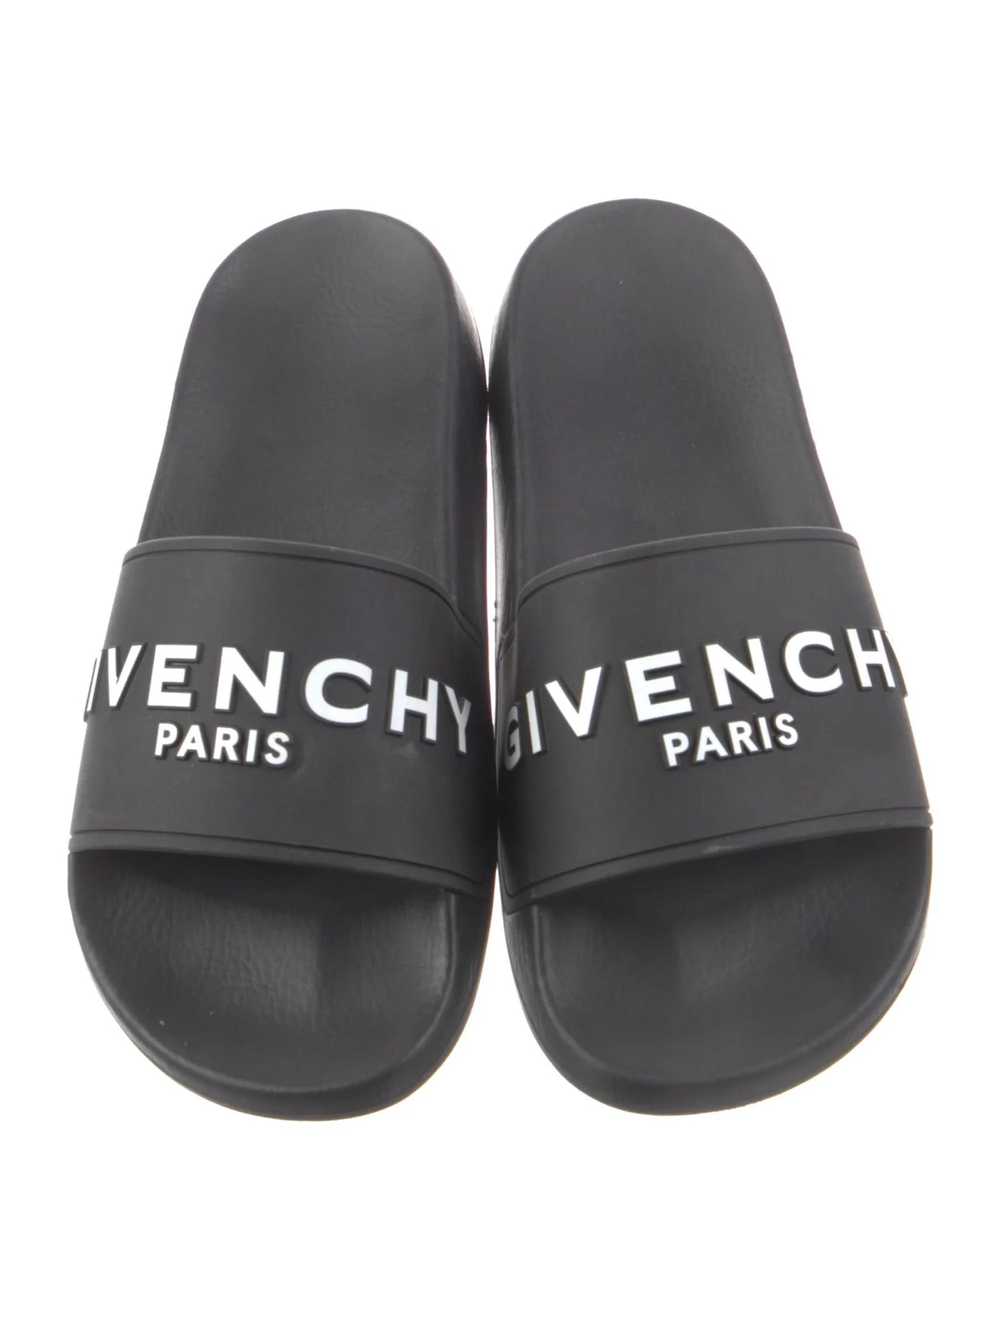 Givenchy Givenchy Slides - Size 9 USA - image 3